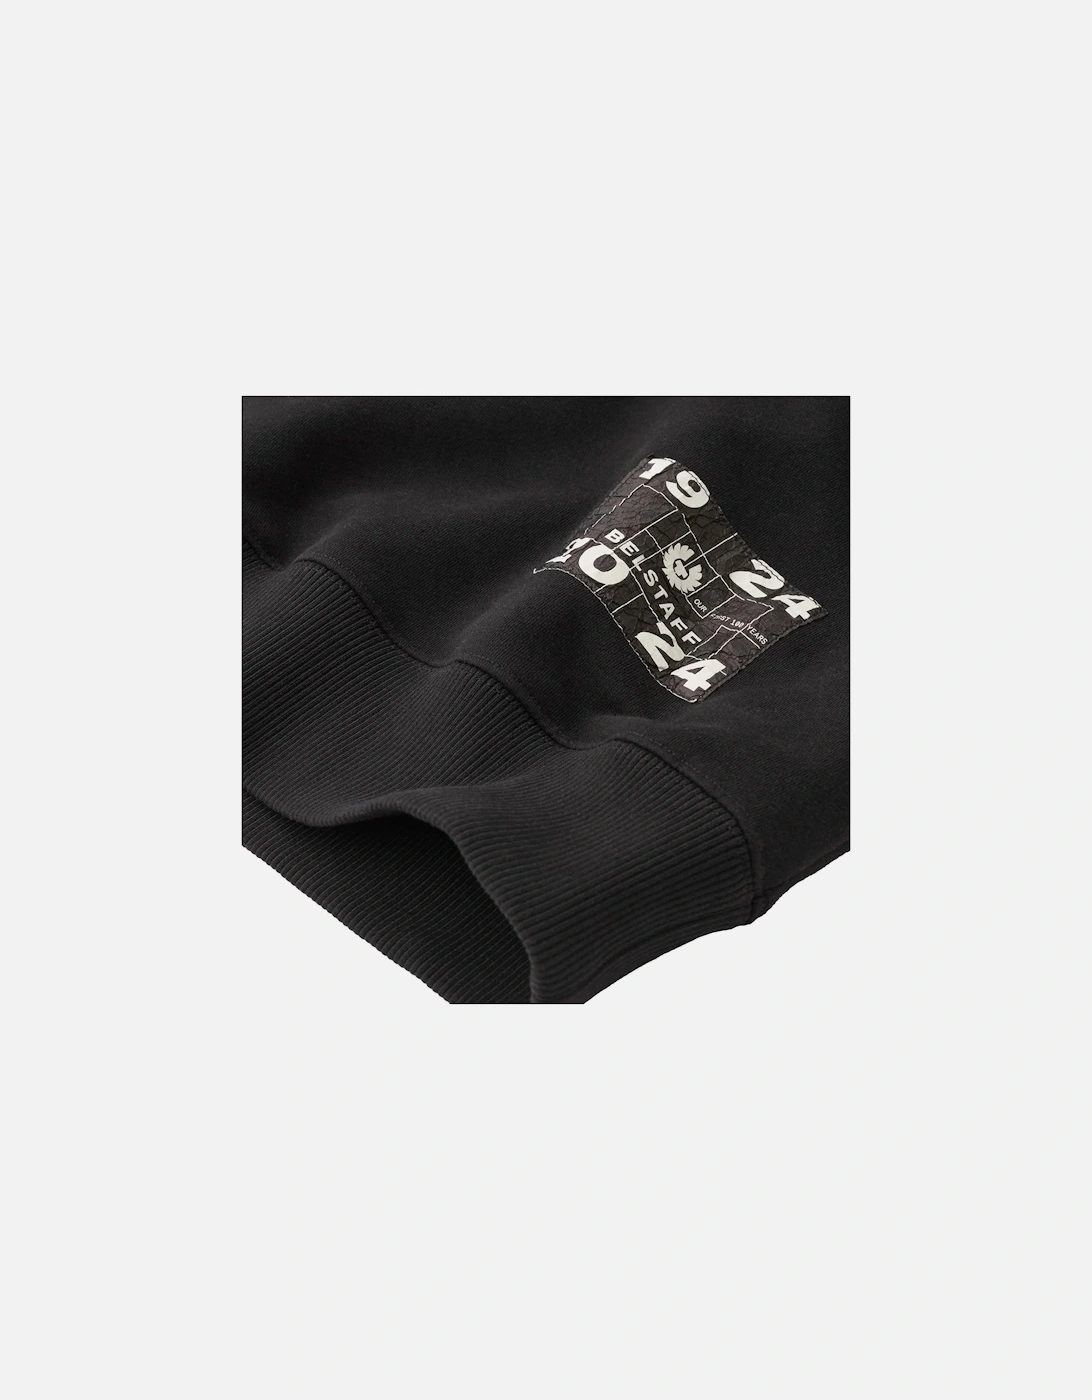 Centenary Applique Label Sweatshirt Black/British Khaki